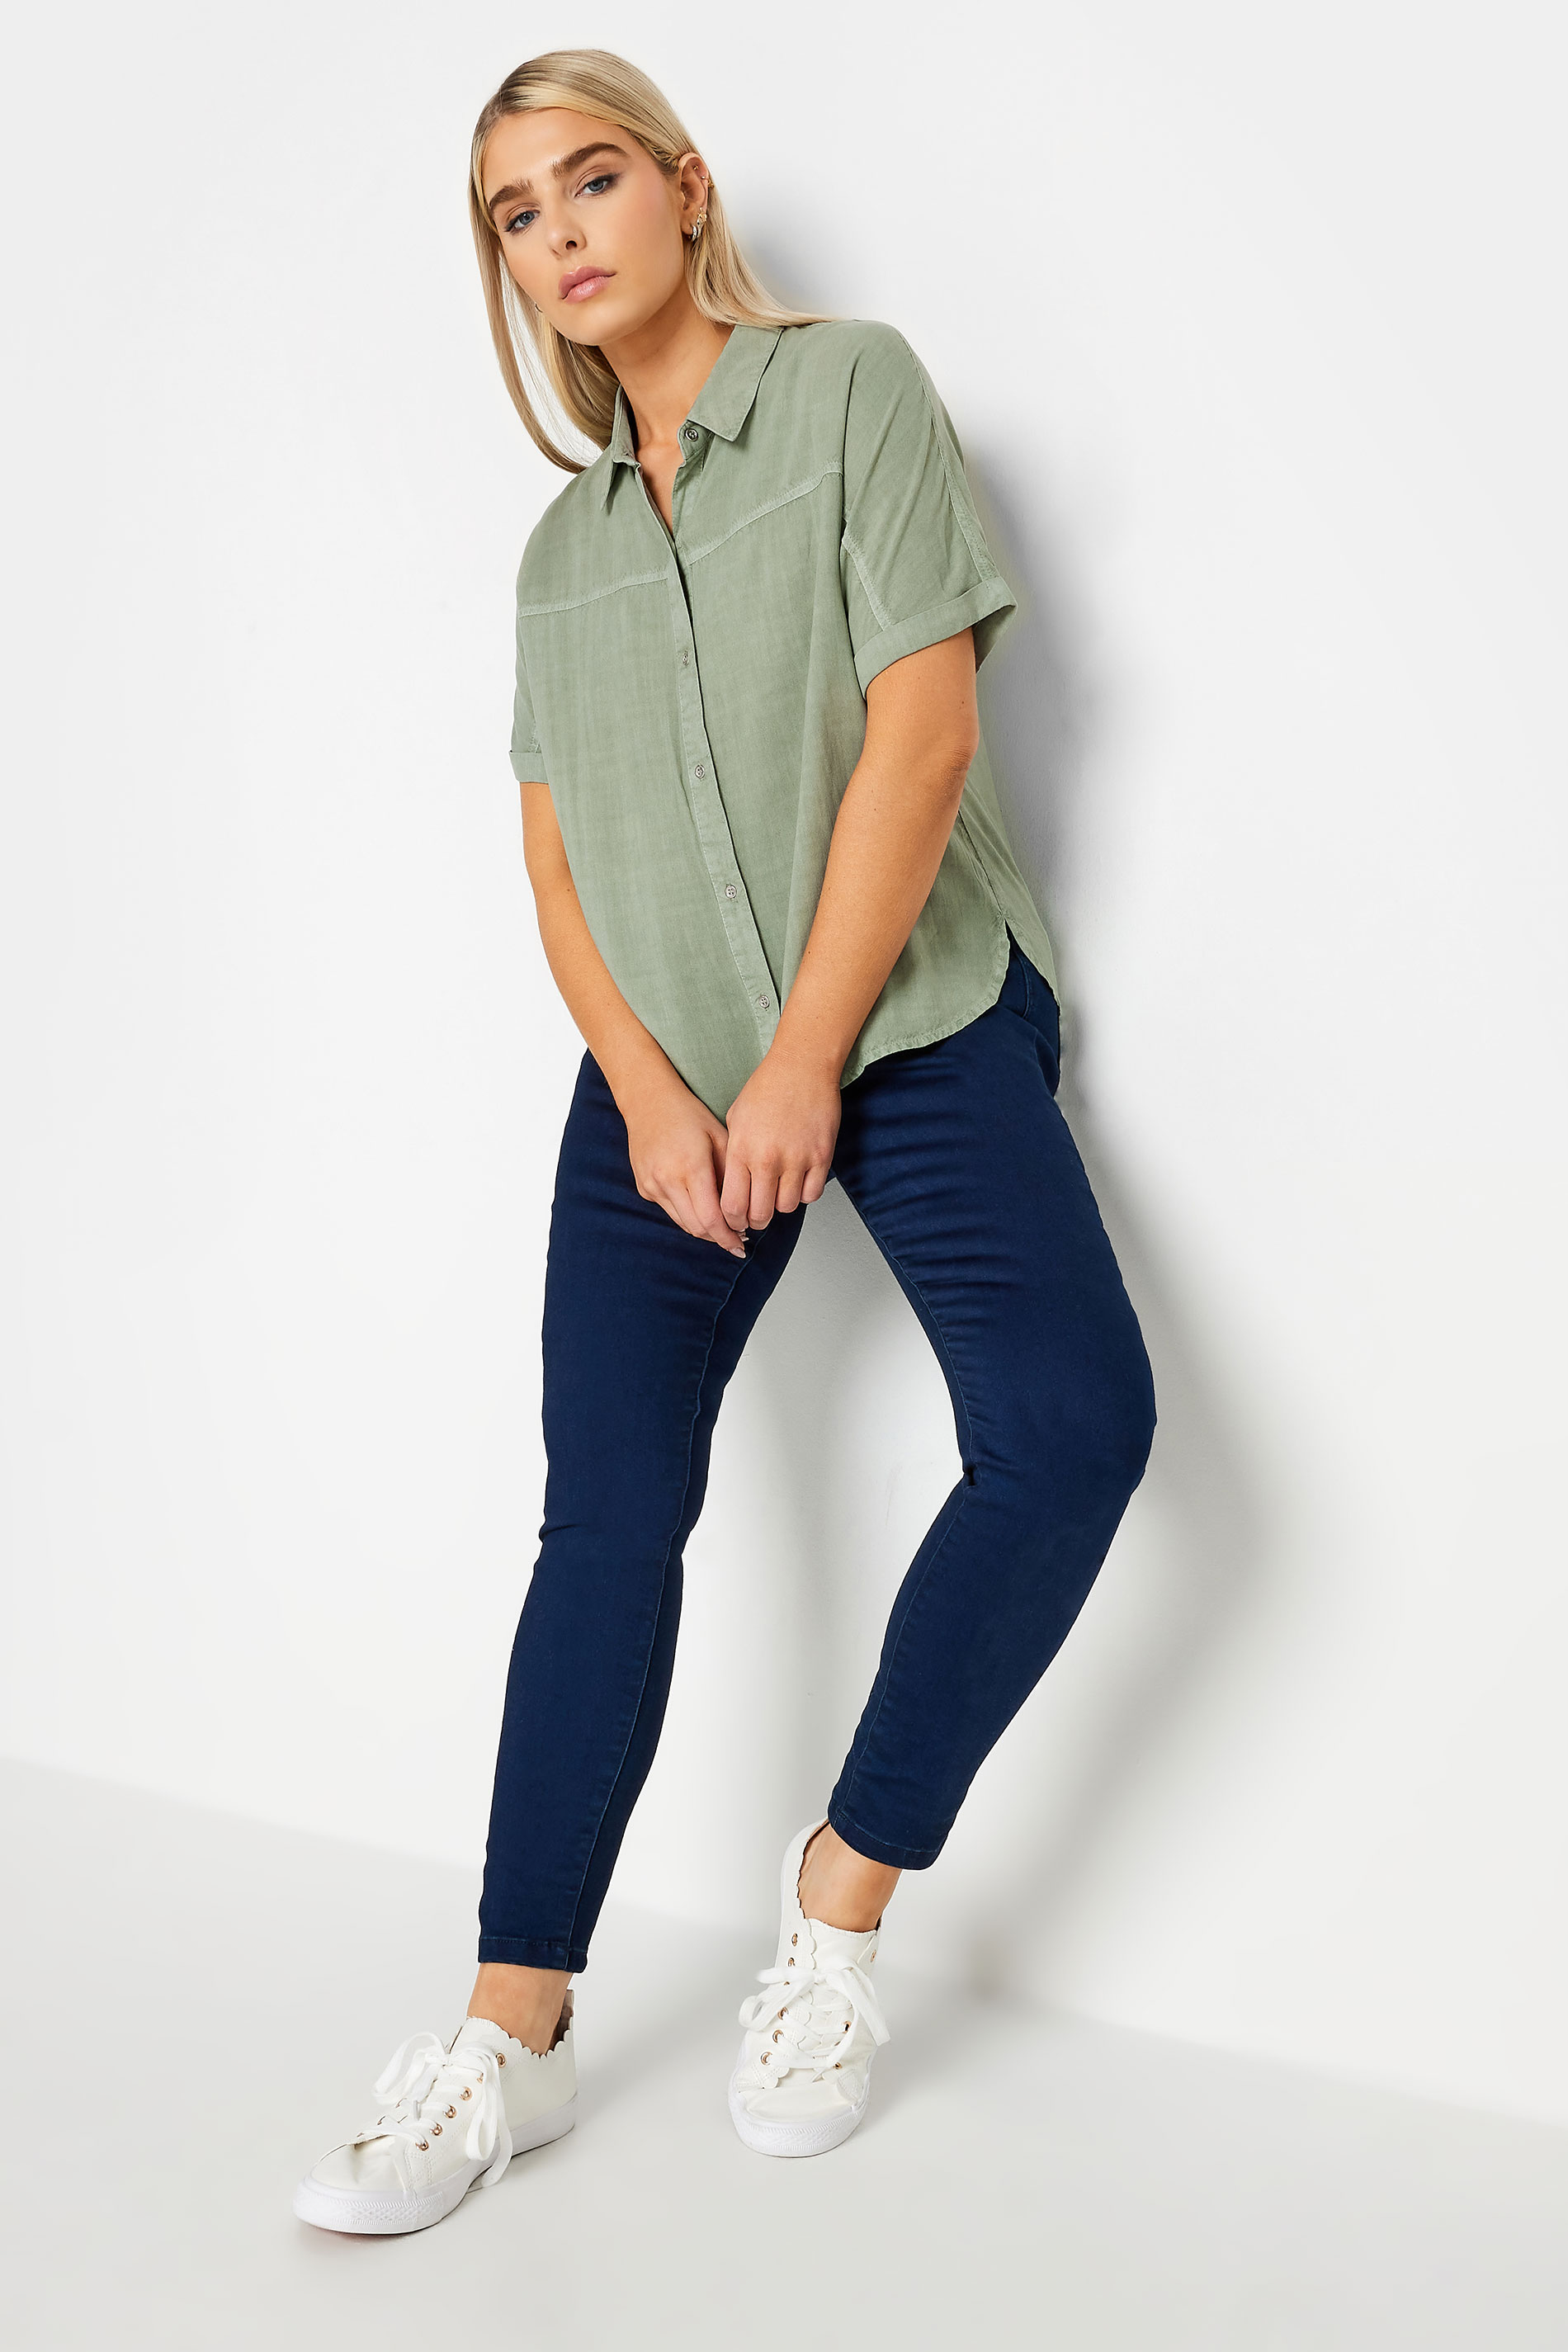 M&Co Sage Green Short Sleeve Shirt | M&Co 2